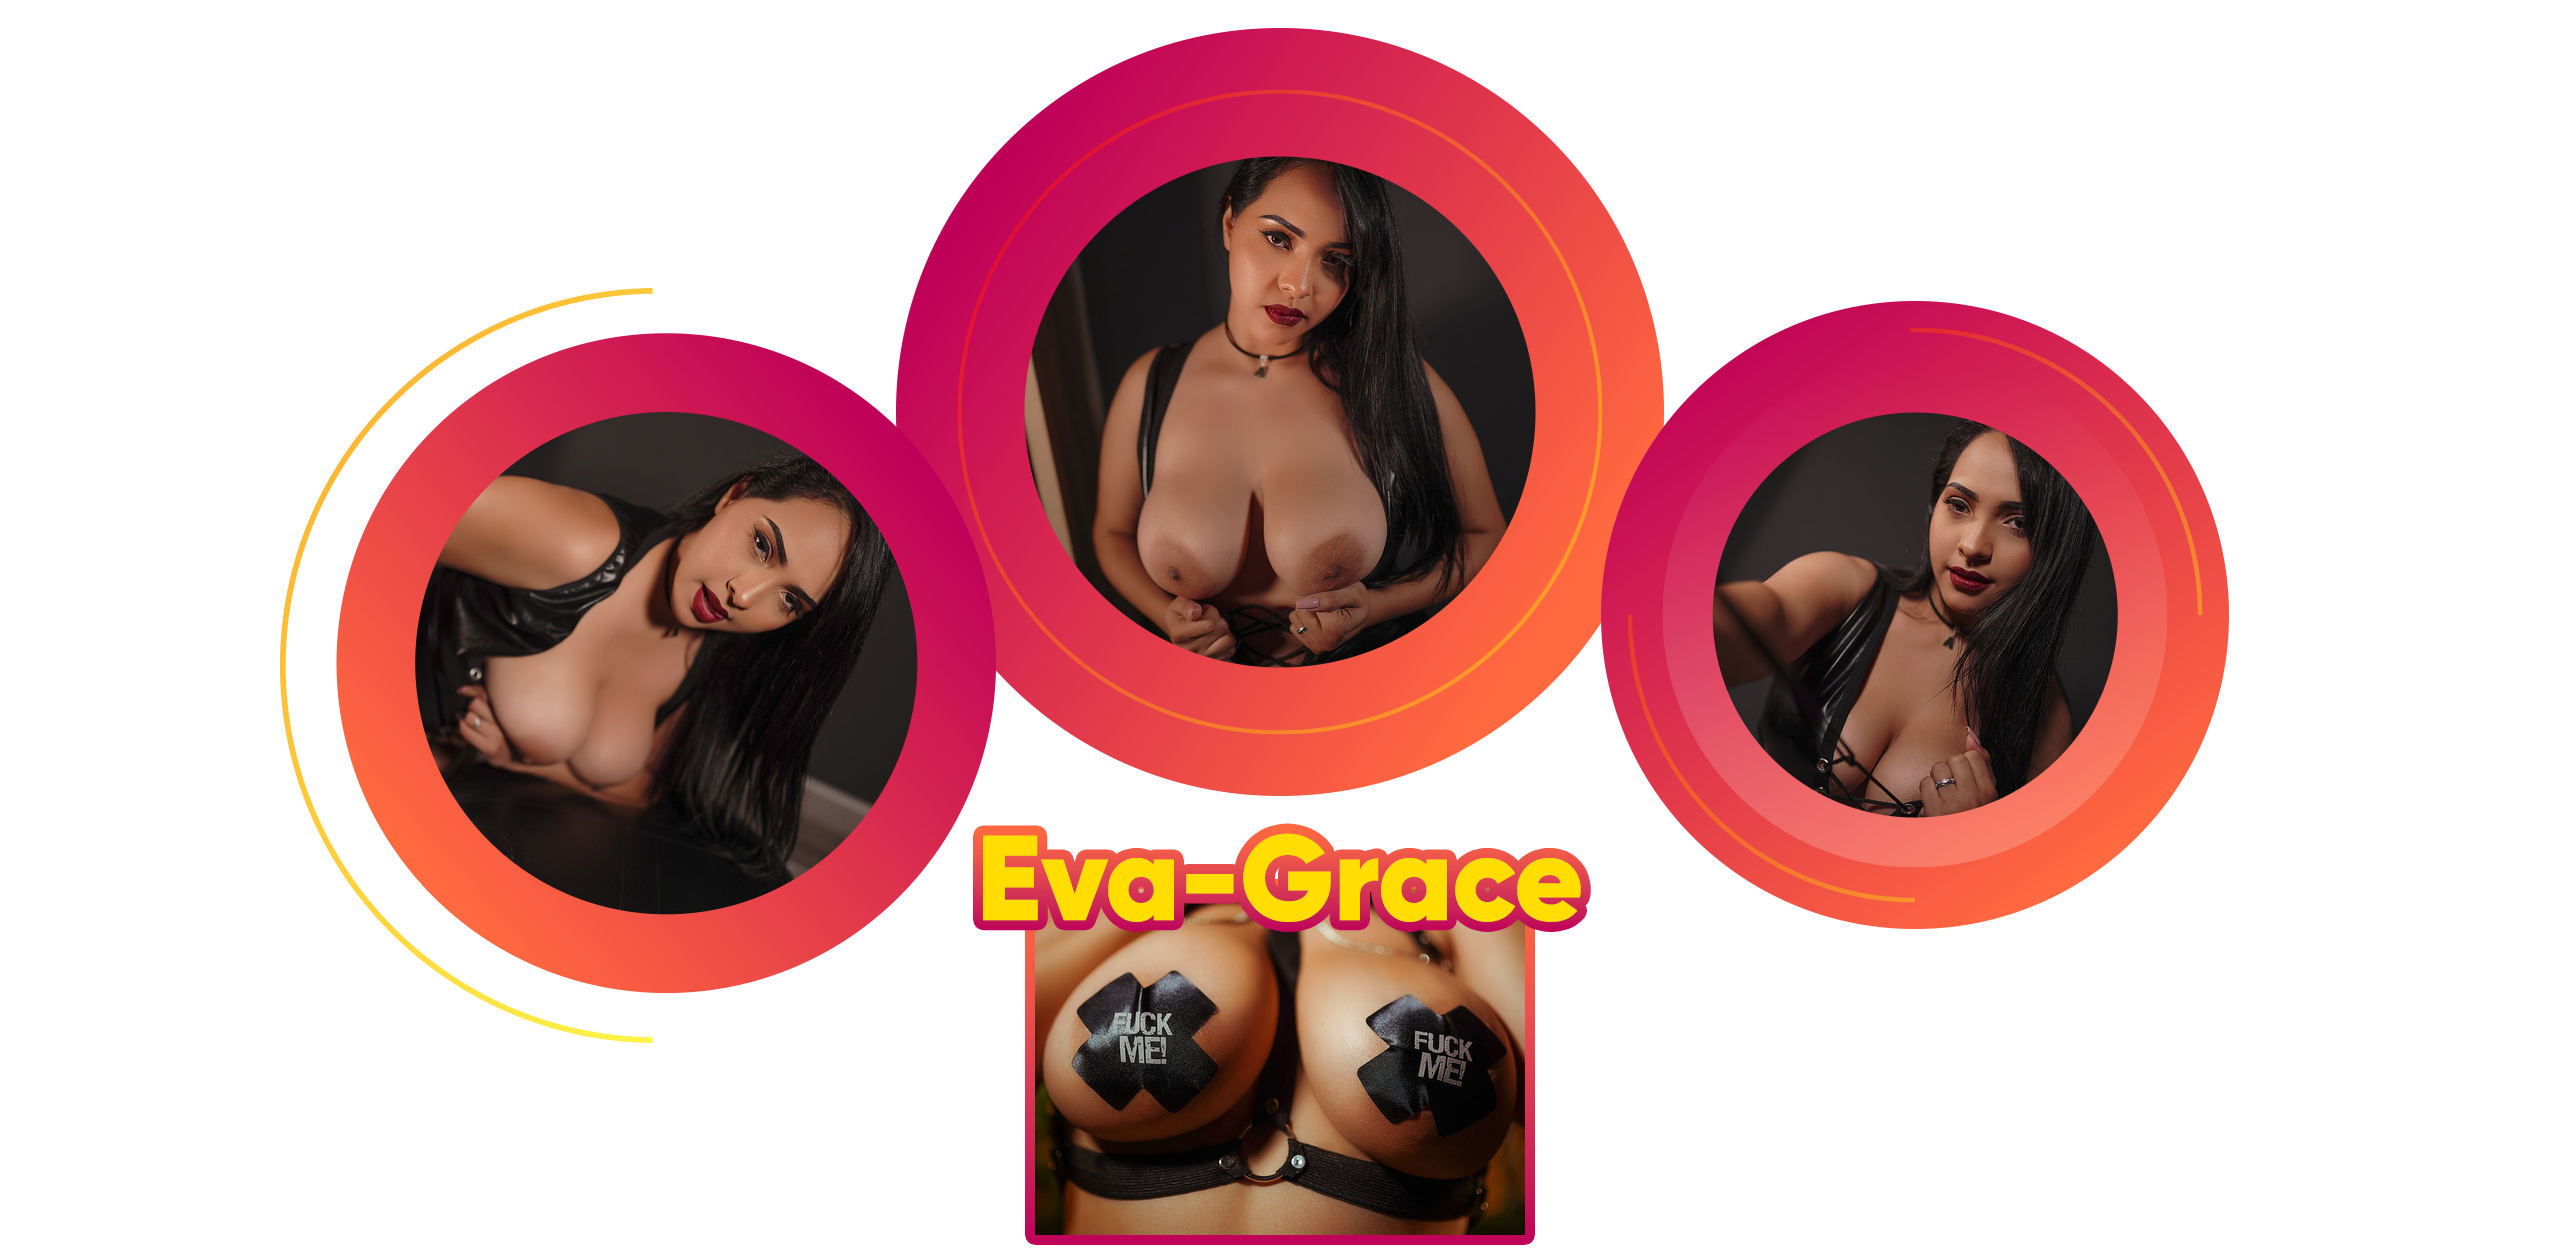 Eva-Grace Hello! Welcome! image: 1